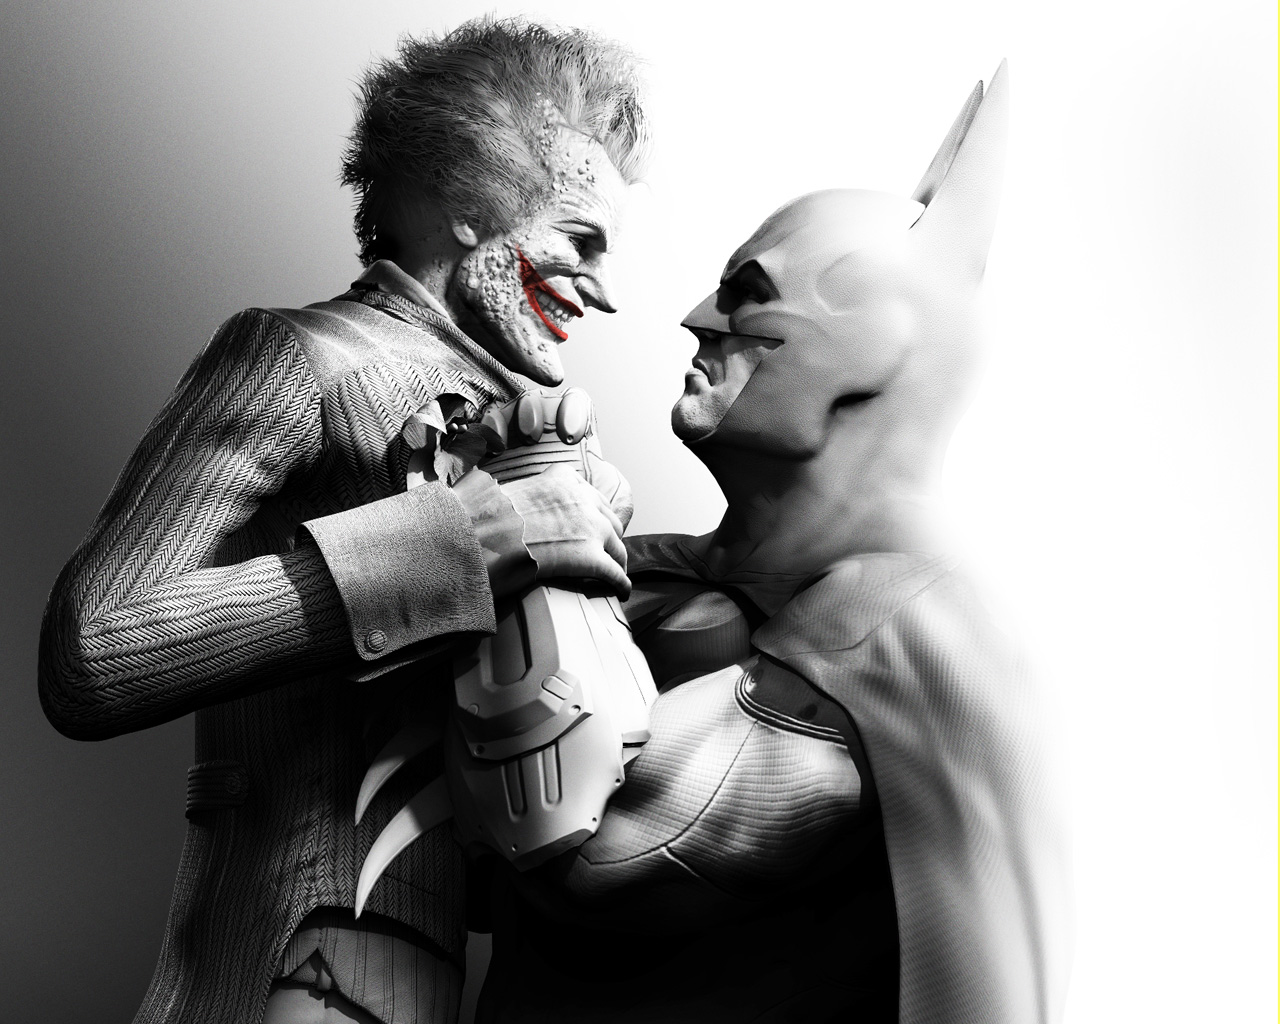 Joker Arkham City Wallpaper - WallpaperSafari